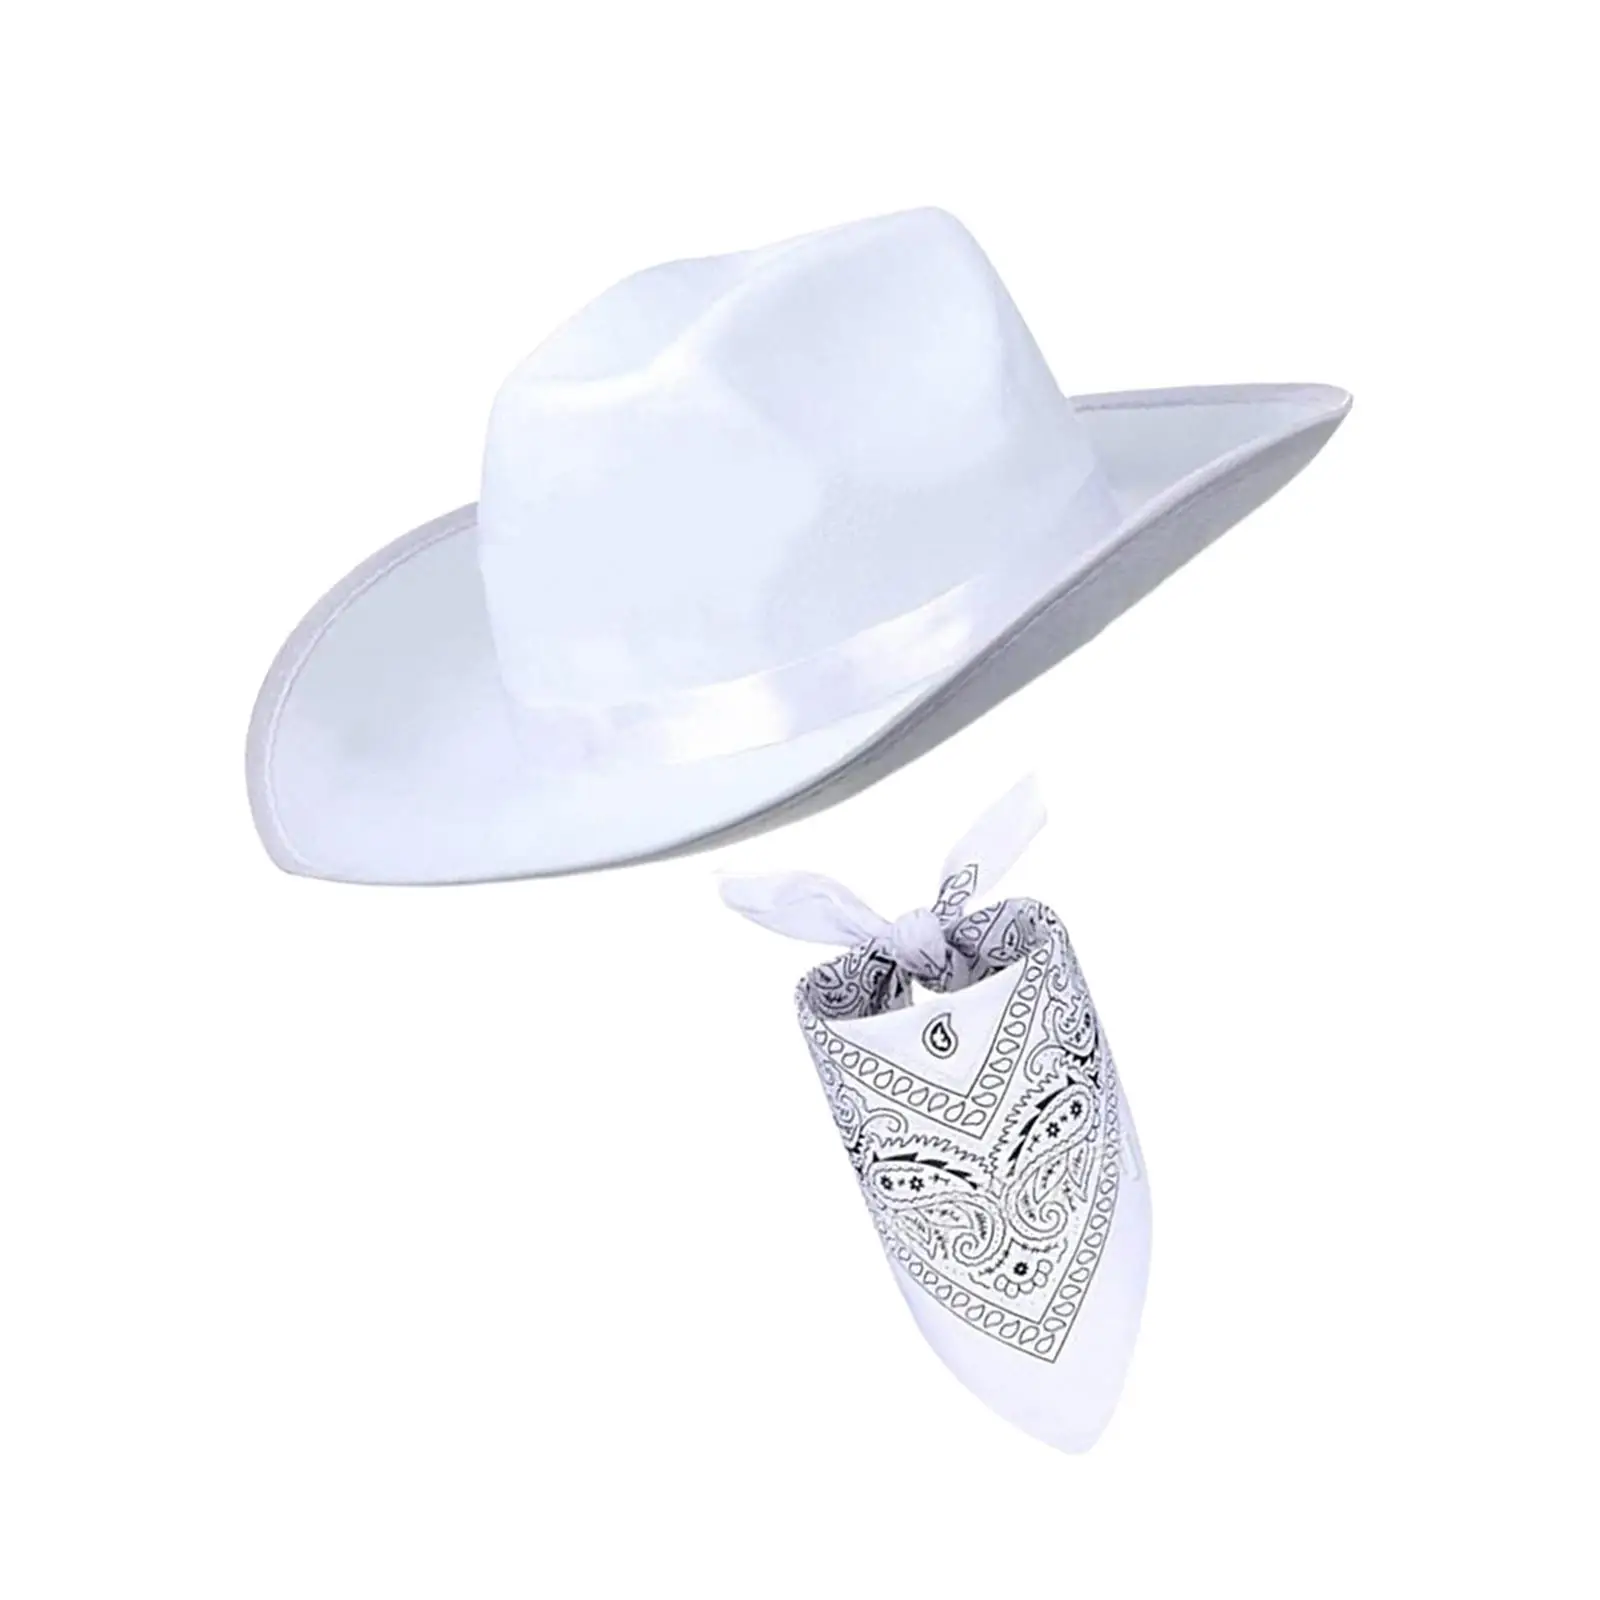 Cowboy Hat with Bandanna Big Brim Cap for Women and Men Performance Dress up